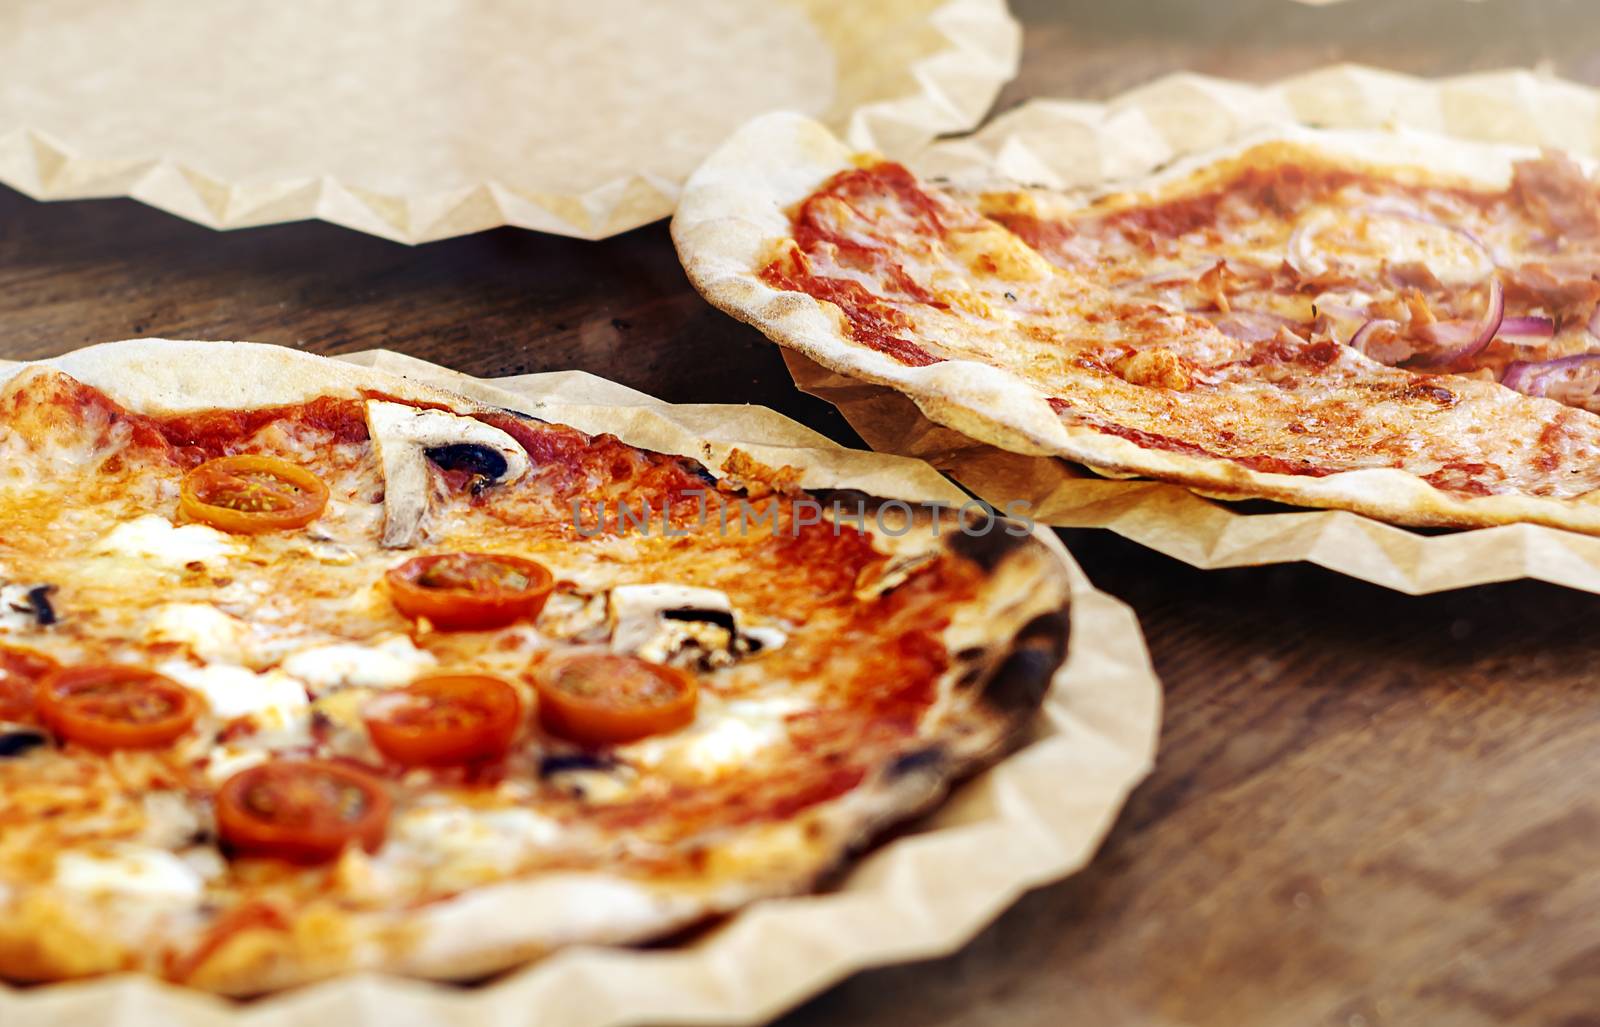 Freshly baked margherita pizza topped with tomato sauce, mozzarella and mushrooms. by rarrarorro